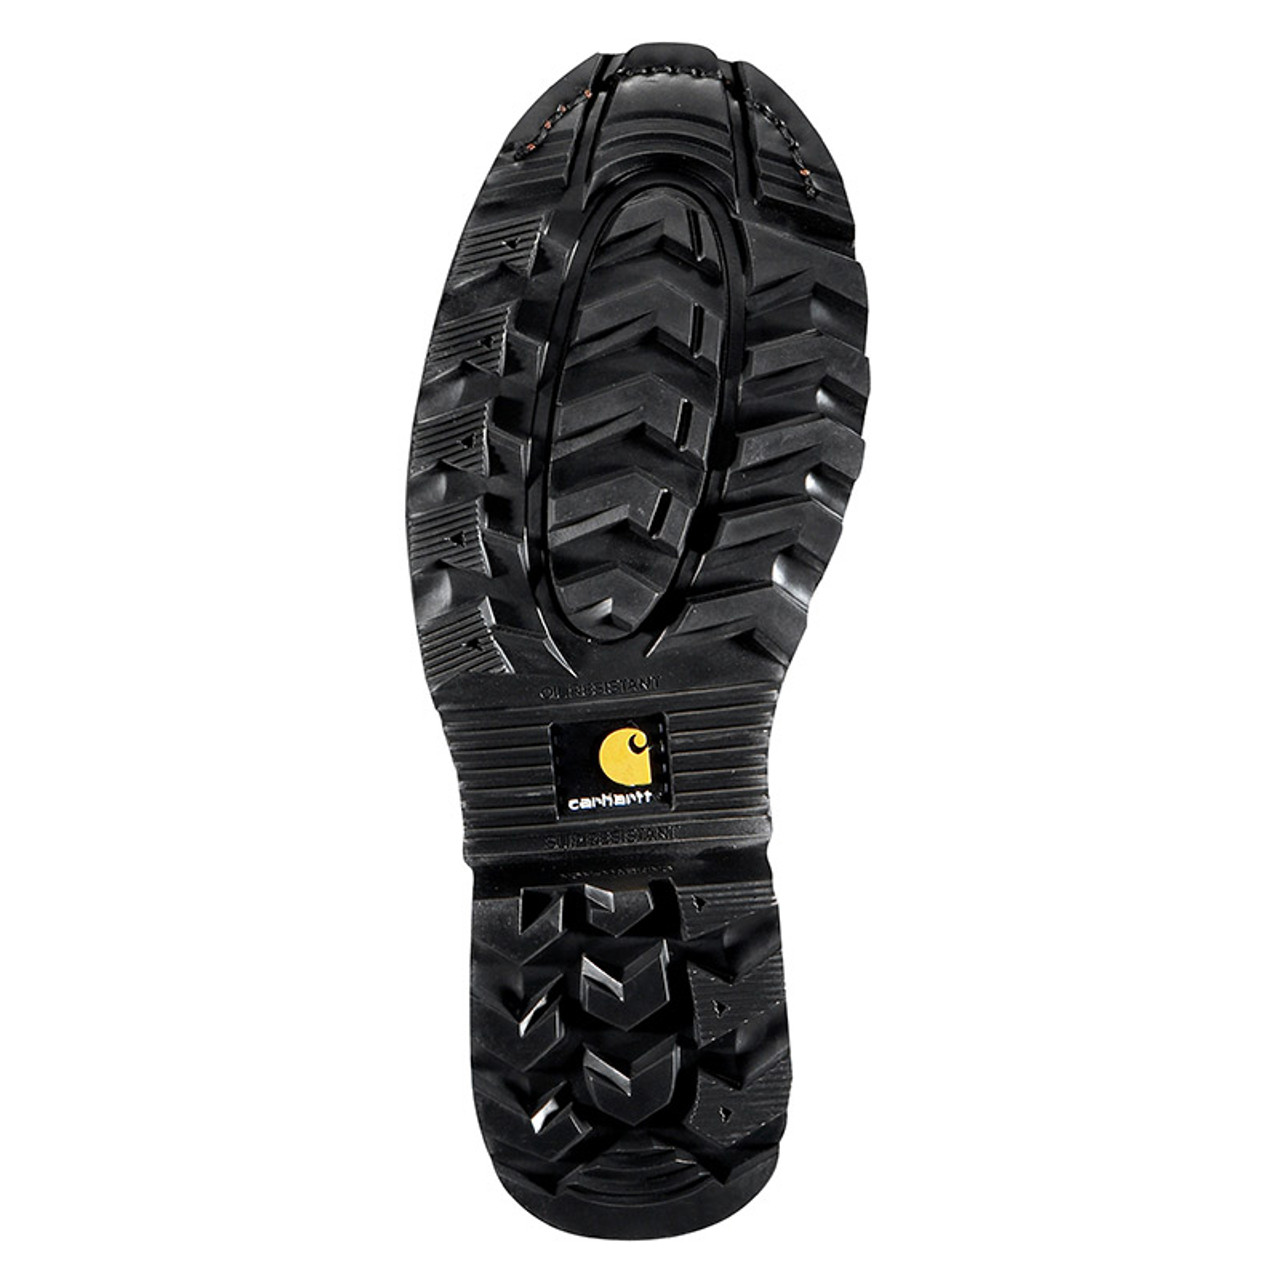 Carhartt CML8360 Men's 8" Composite Toe Waterproof Logger Climbing Boots Shoes 